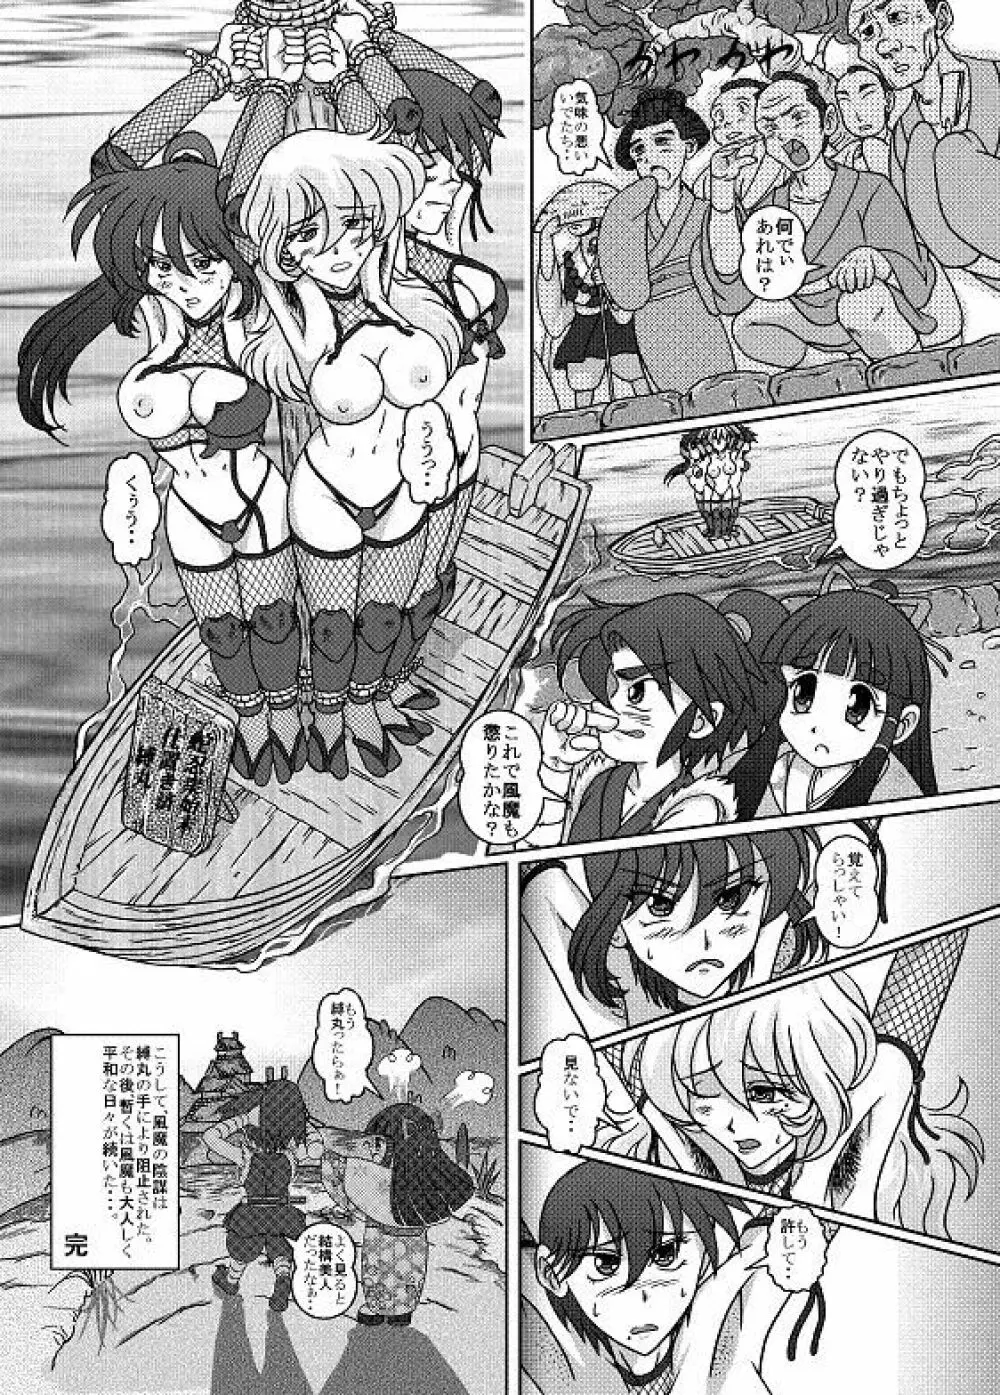 Same-themed manga about kid fighting female ninjas from japanese imageboard. 46ページ